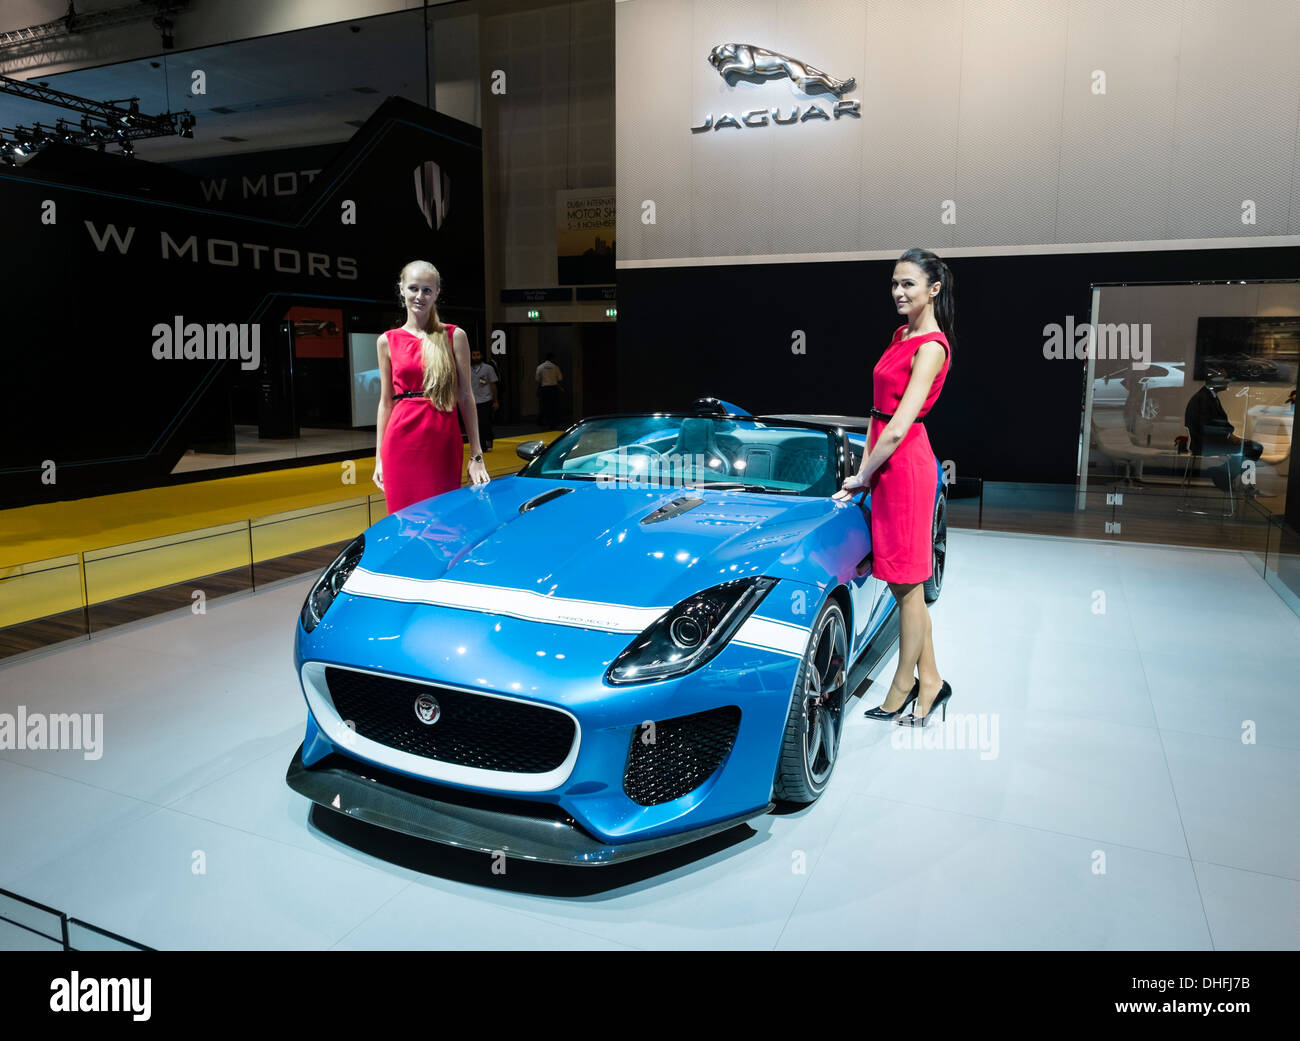 Jaguar Progetto 7 concept car al Dubai Motor Show 2013 Emirati Arabi Uniti Foto Stock